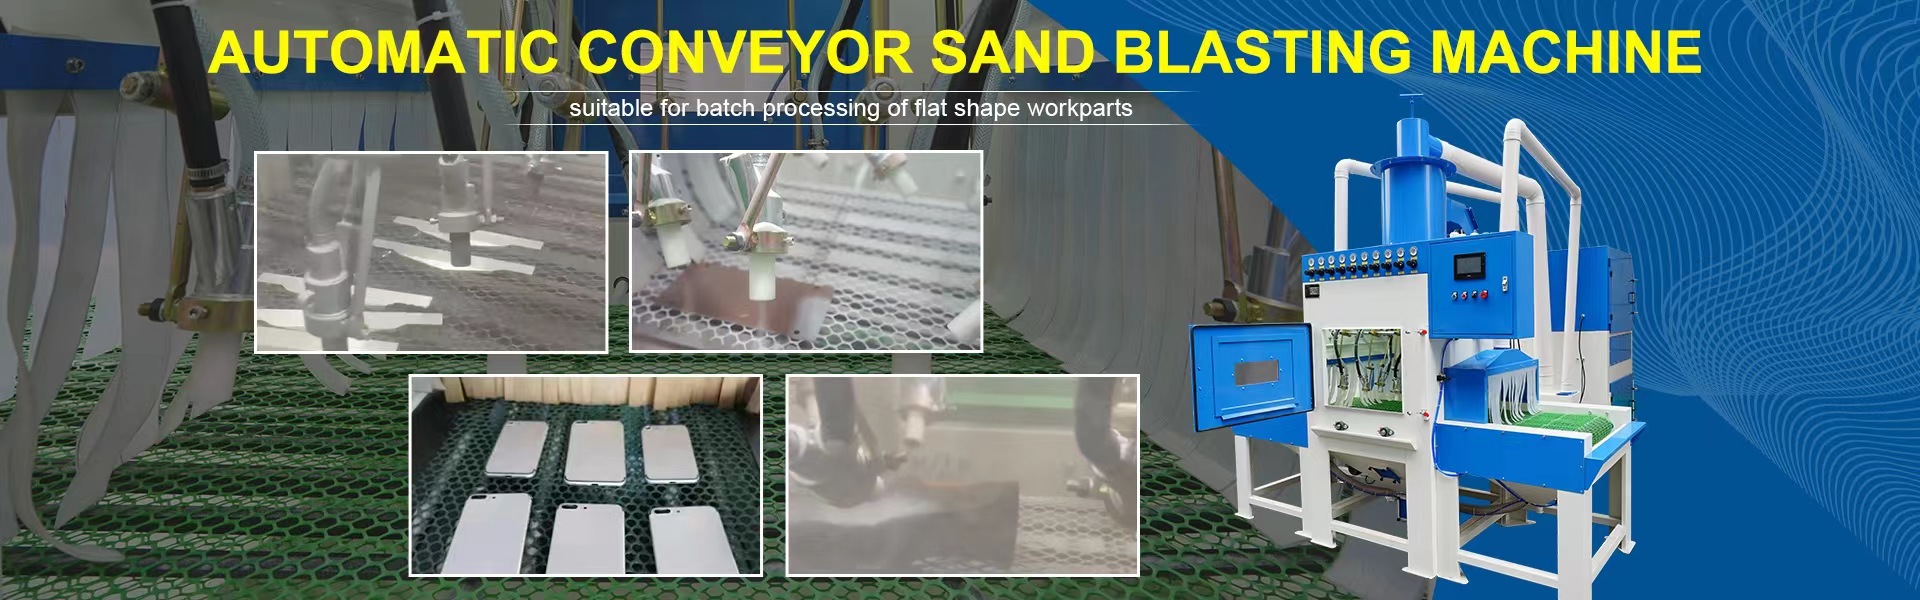 conveyor sand blasting machine